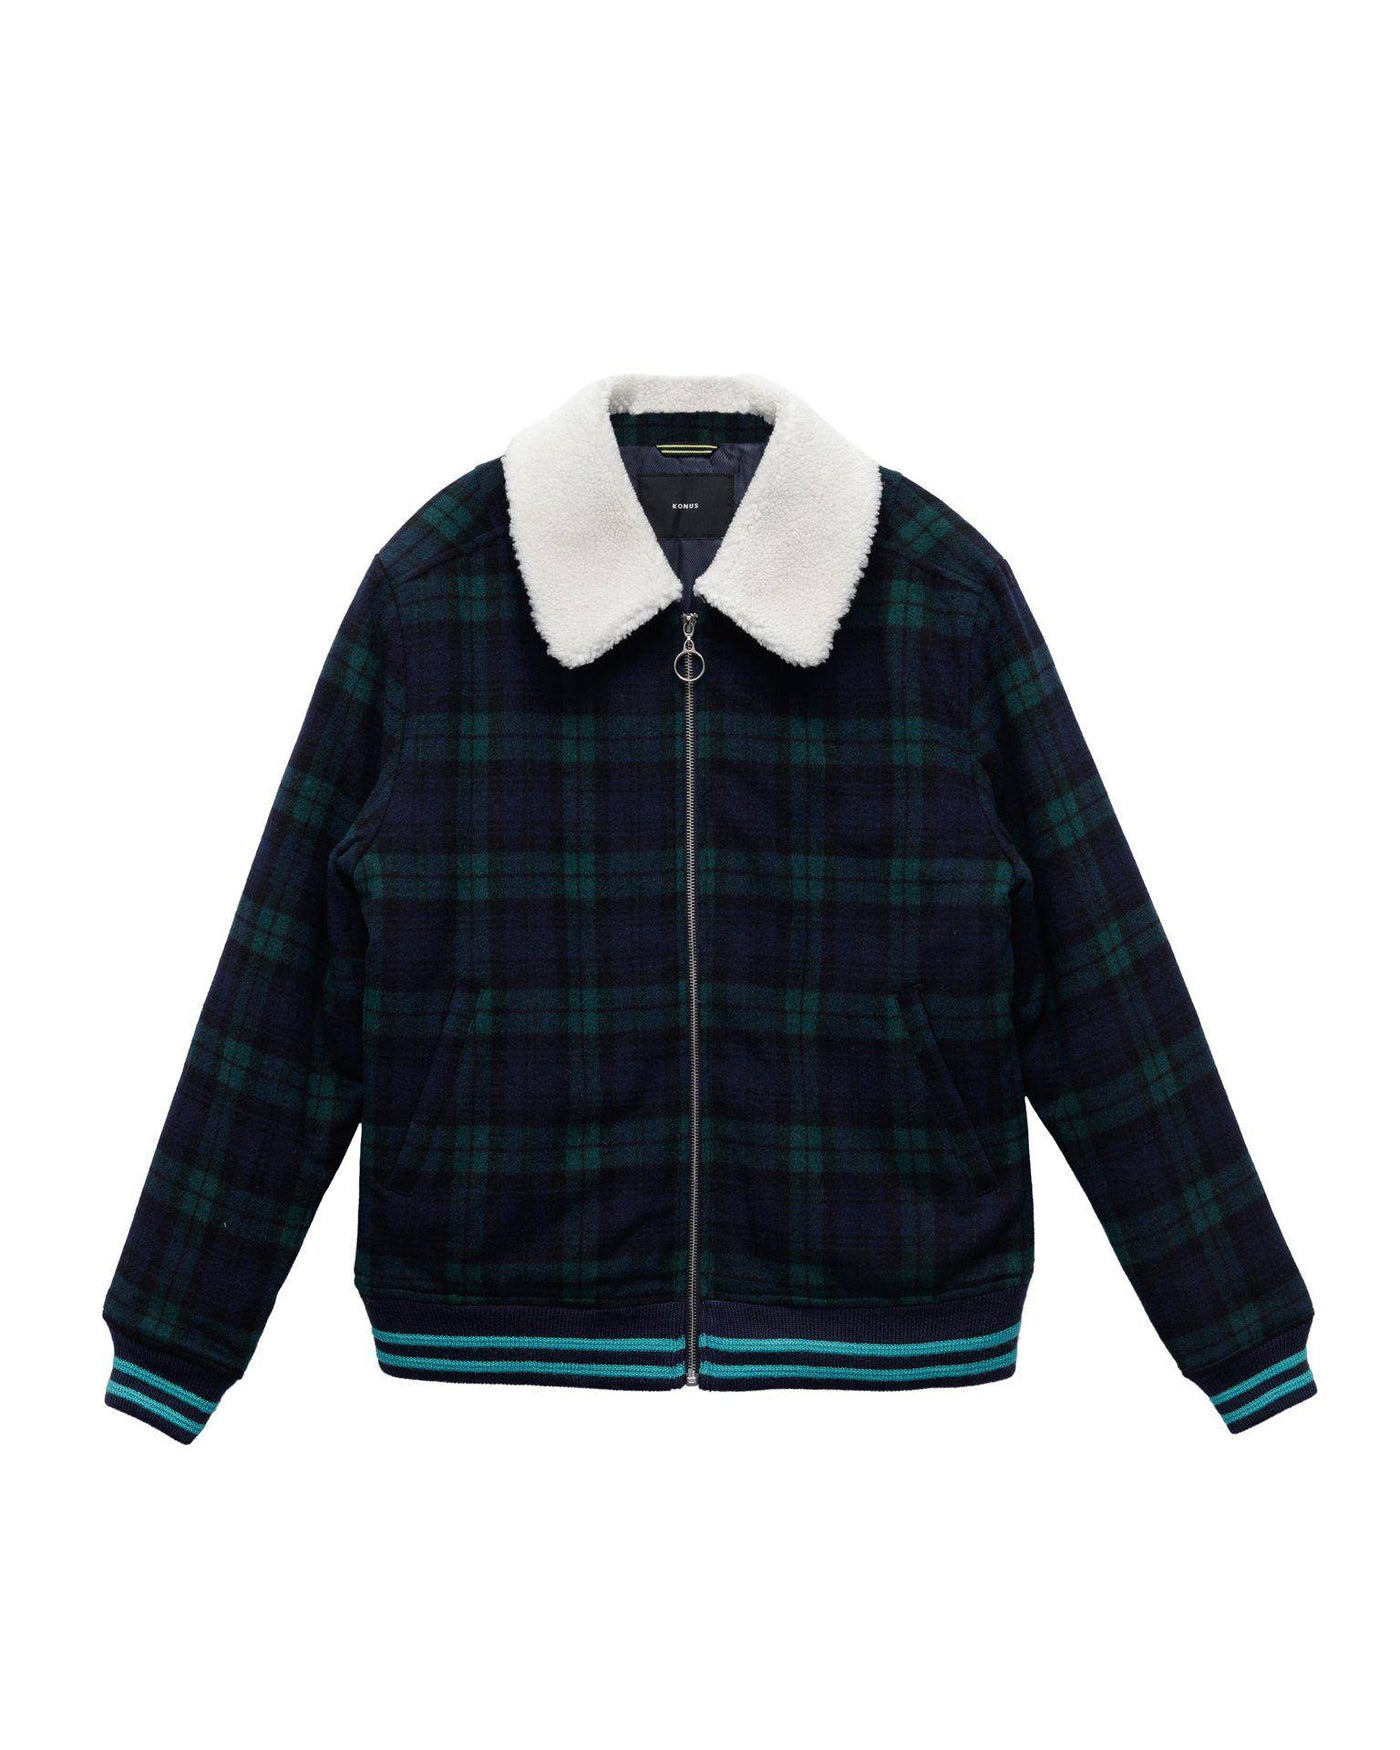 Konus Men's Wool Blend Plaid Jacket with Sherpa Collar in Green by Shop at Konus